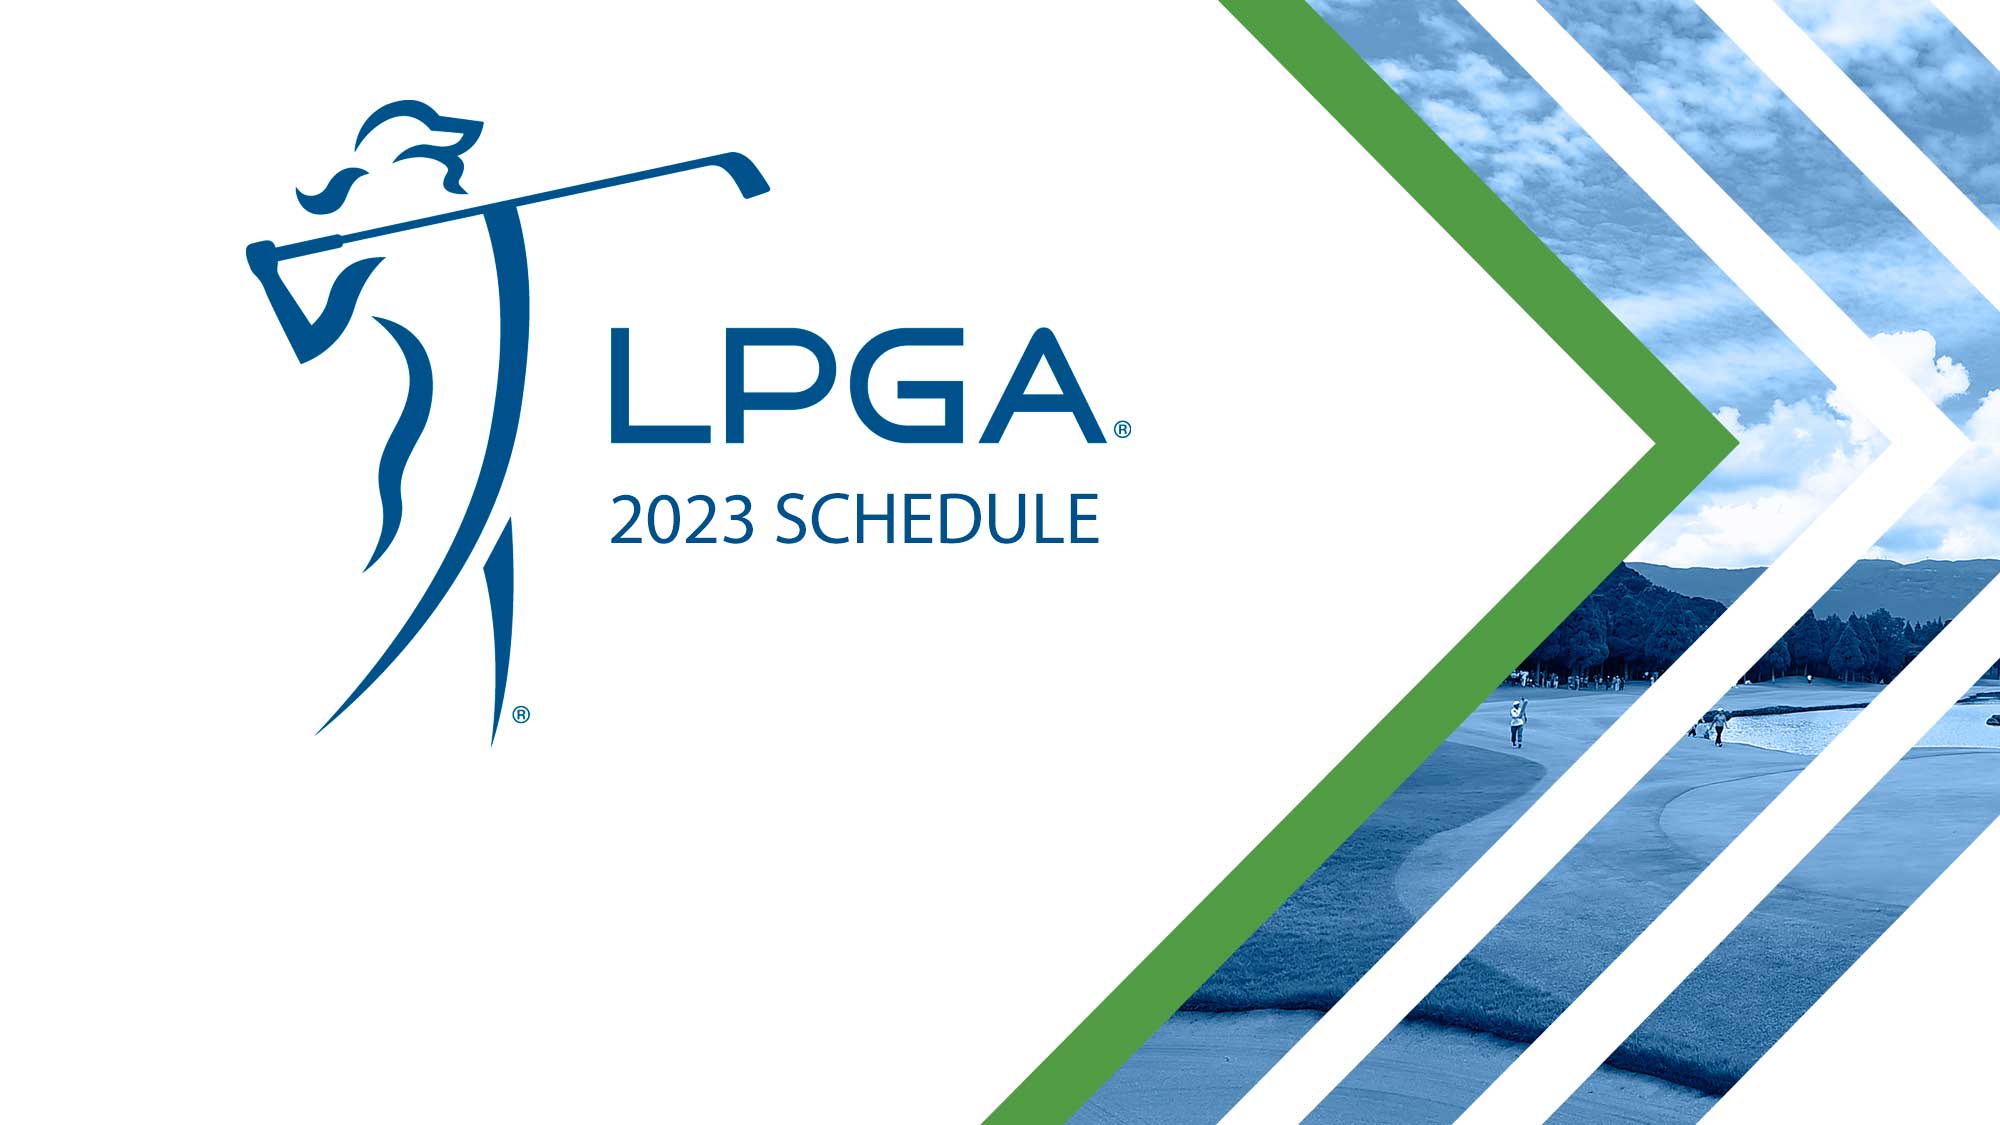 LPGA Tour announces record-breaking 2023 schedule | Golf Business Technology